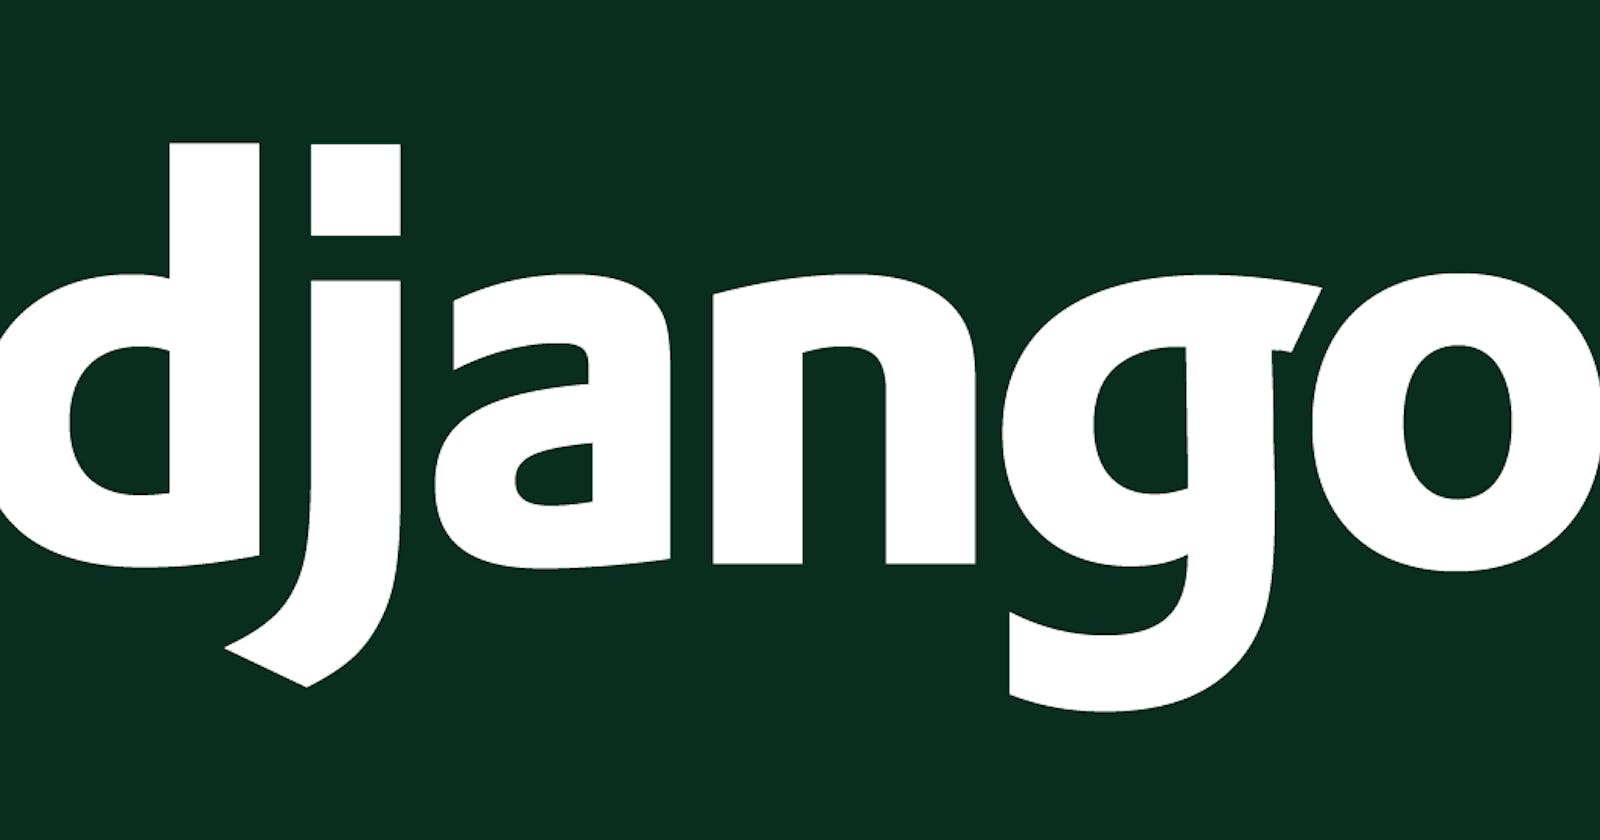 Django authenticate and login methods